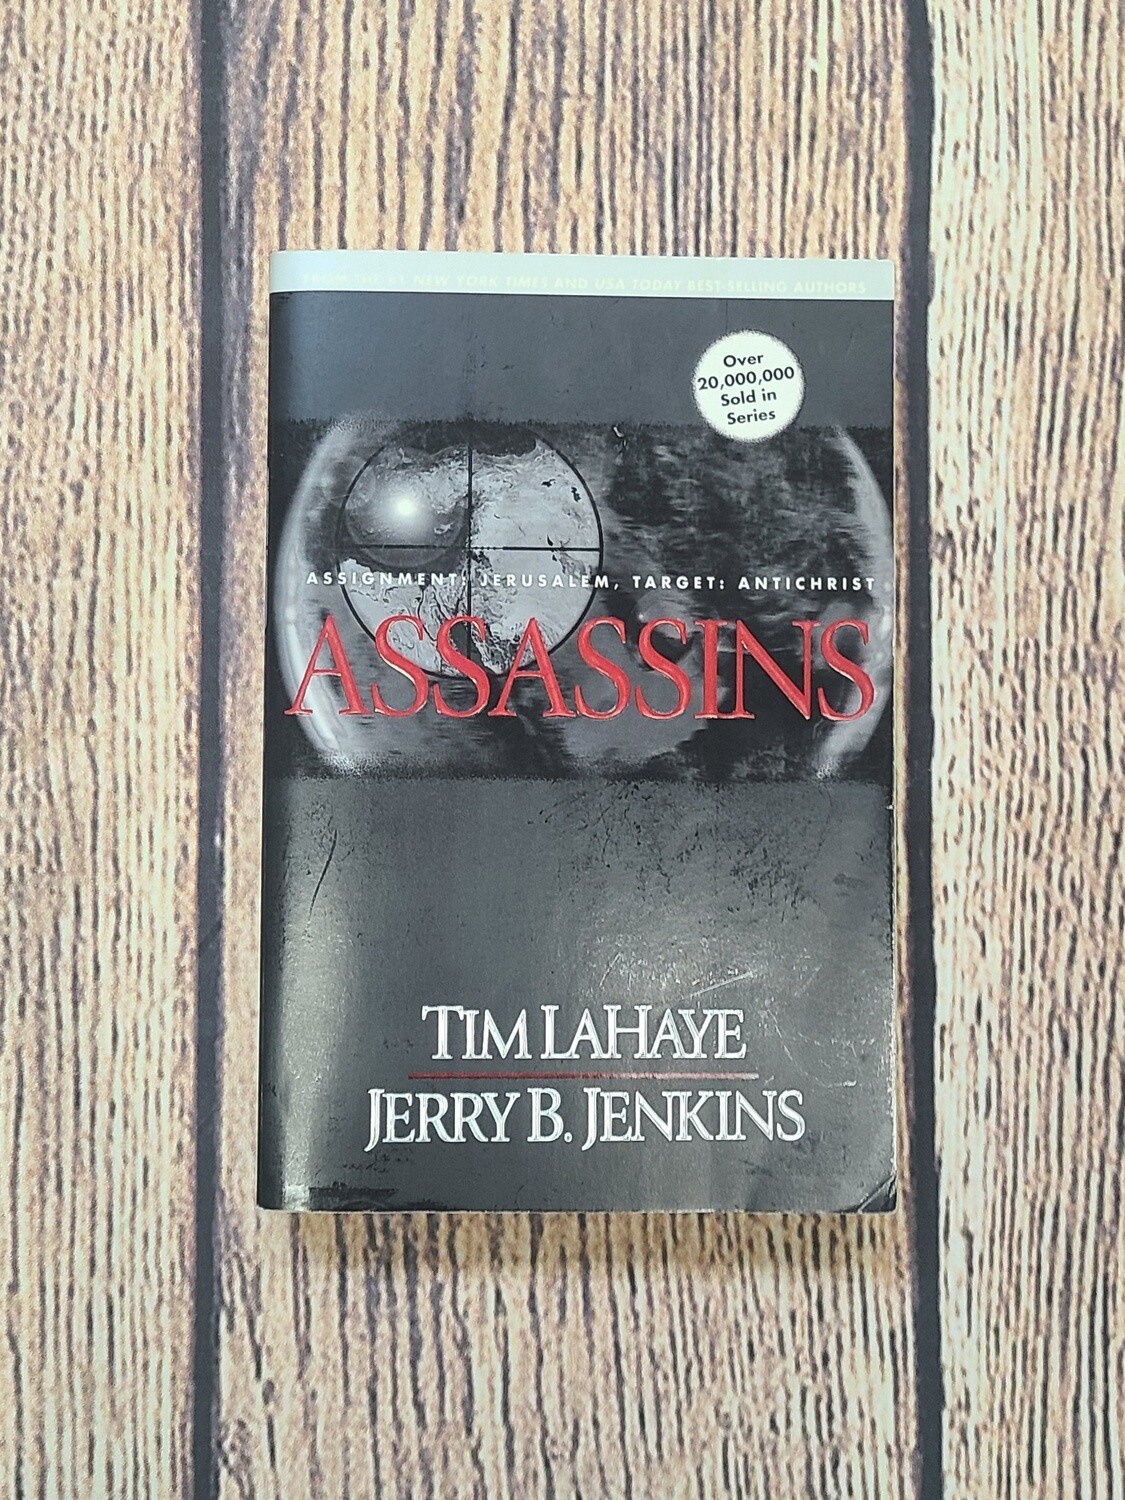 Assassins - Assignment: Jerusalem, Target: Antichrist by Time LaHaye & Jerry B. Jenkins - Paperback